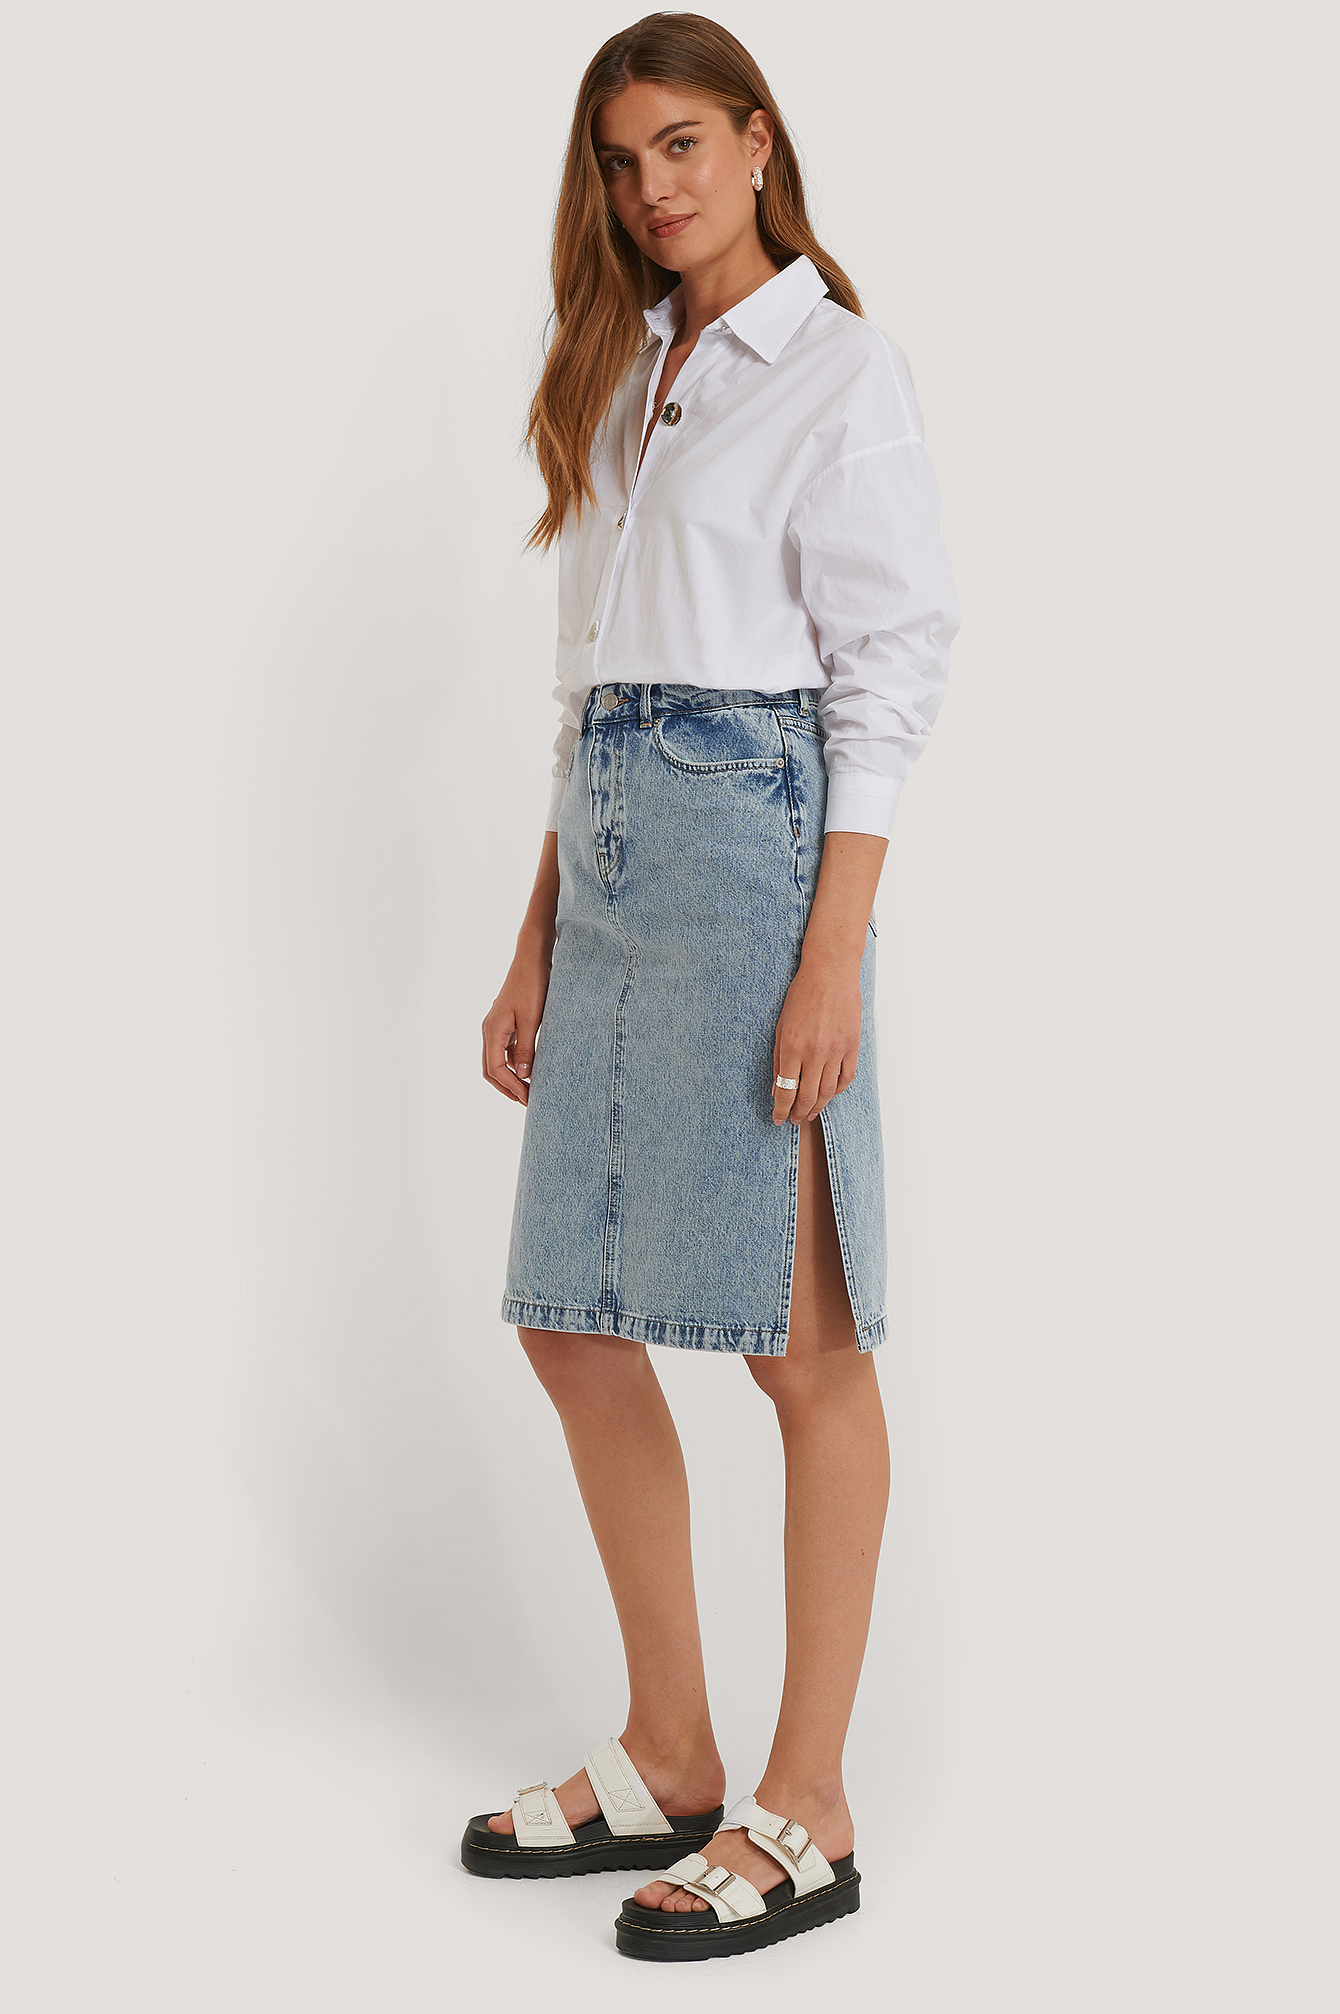 jean skirt with slit